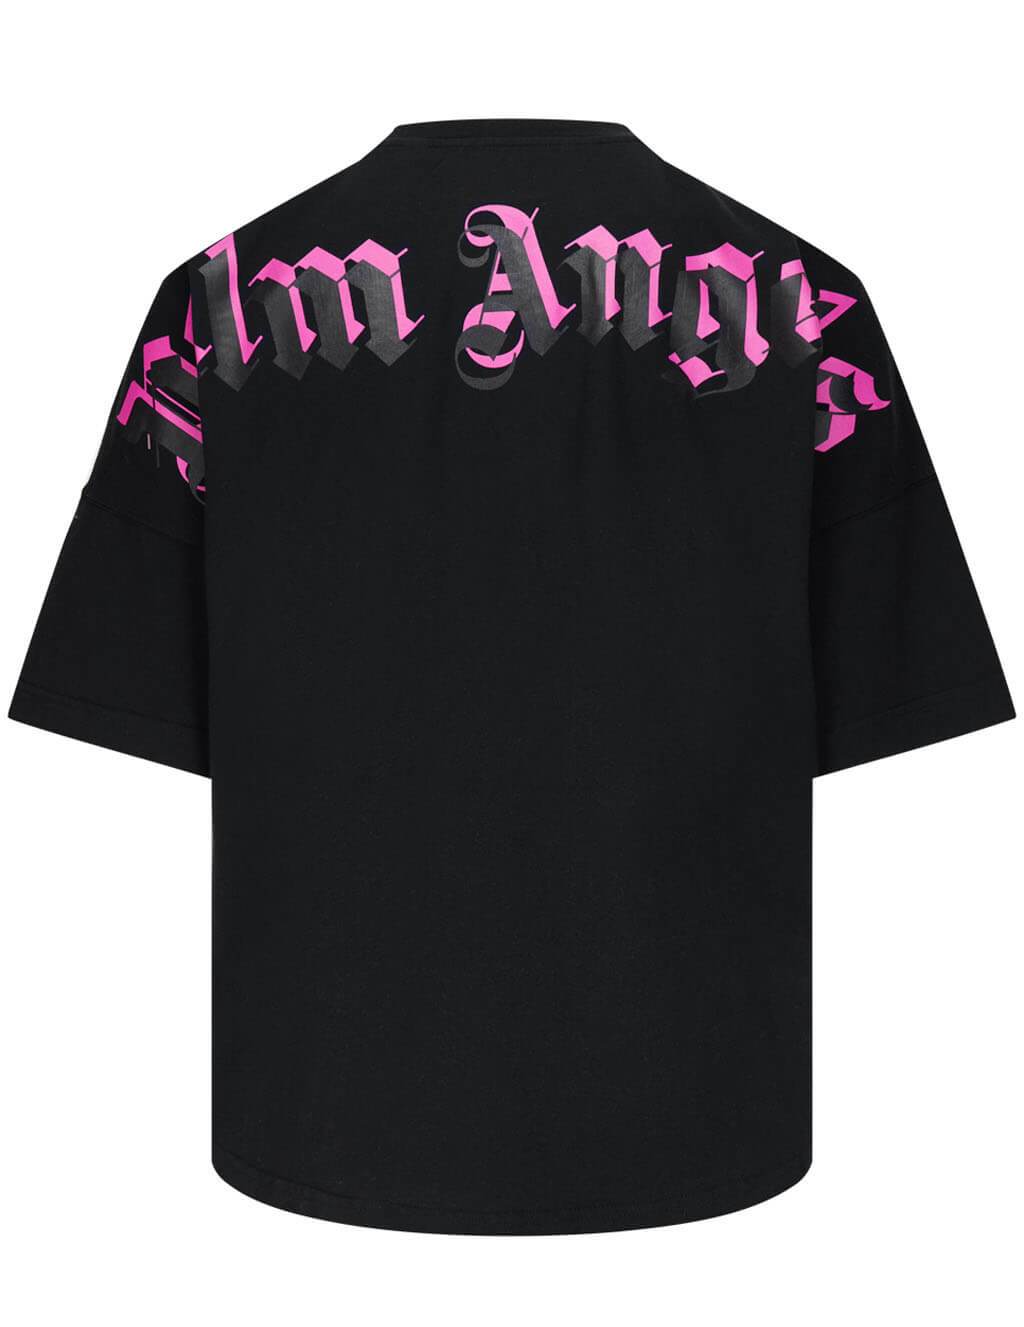 Palm Angels Double Logo T-Shirt Black/Fushia